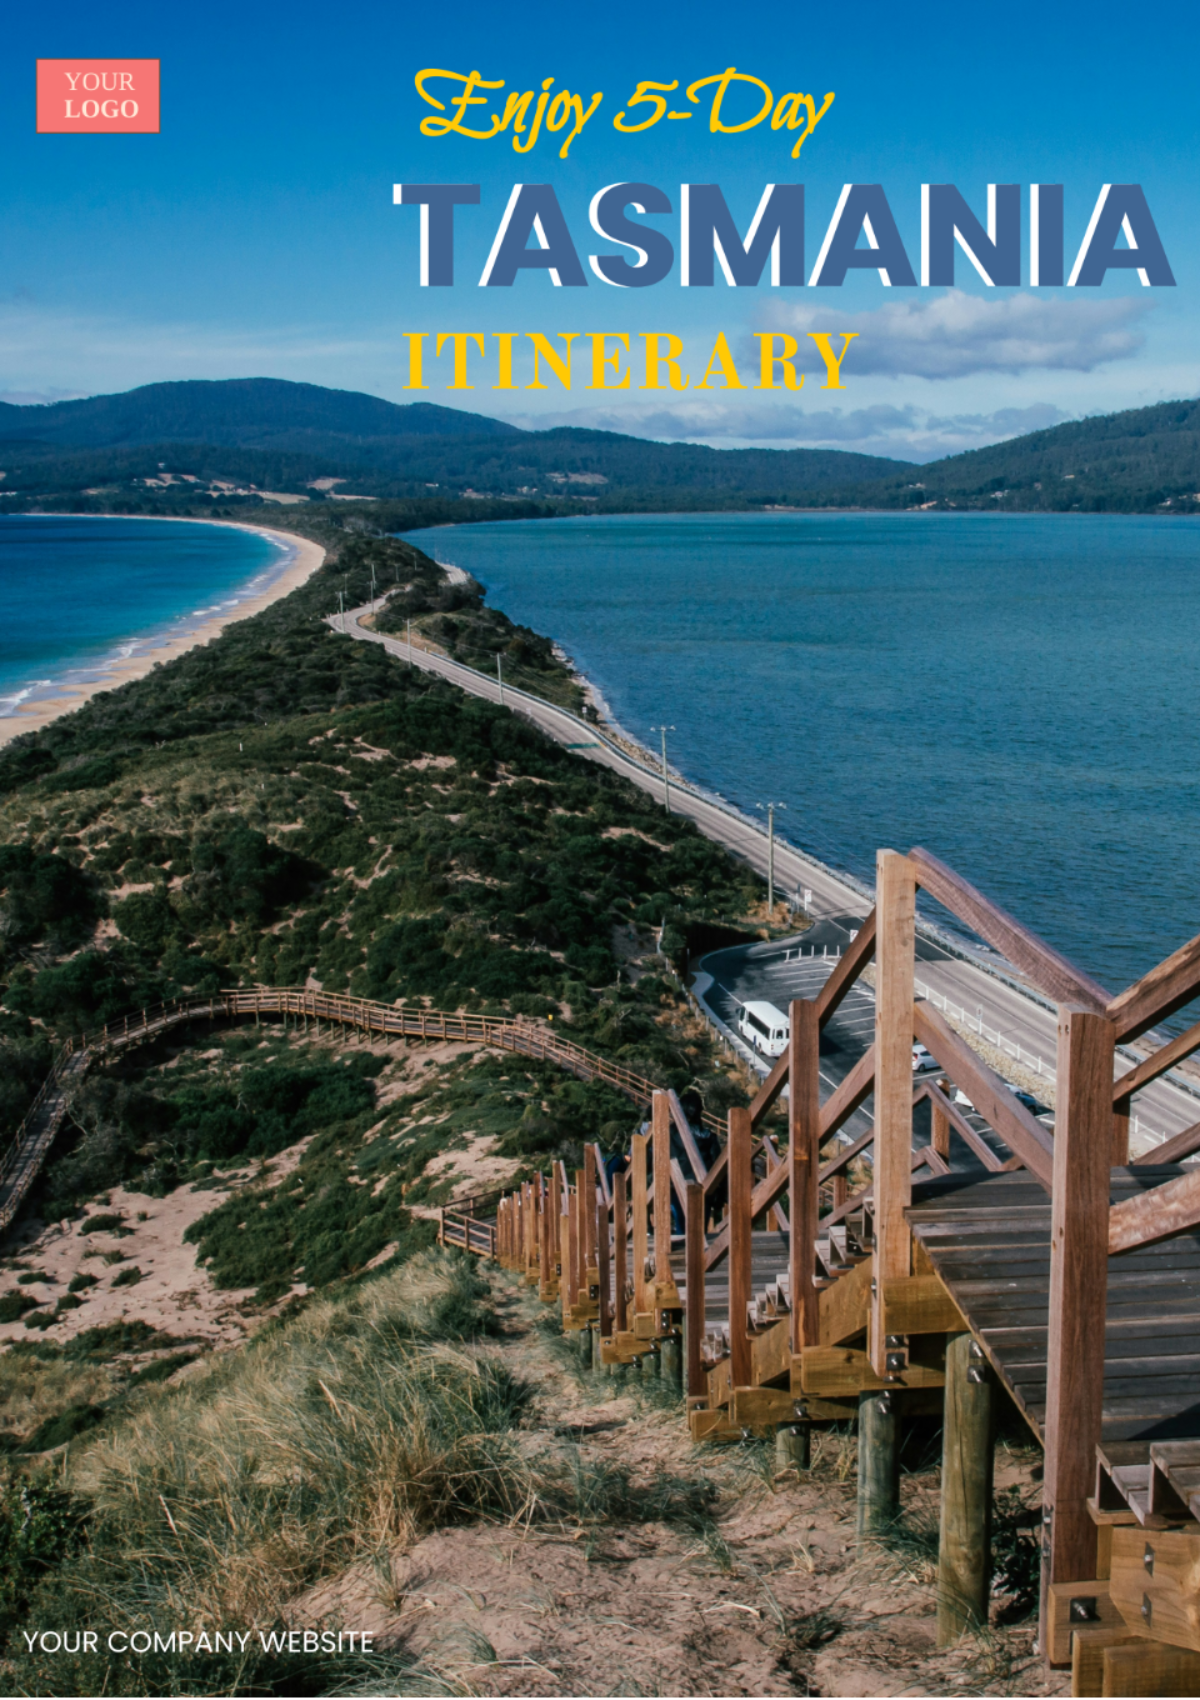 5 Day Tasmania Itinerary Template